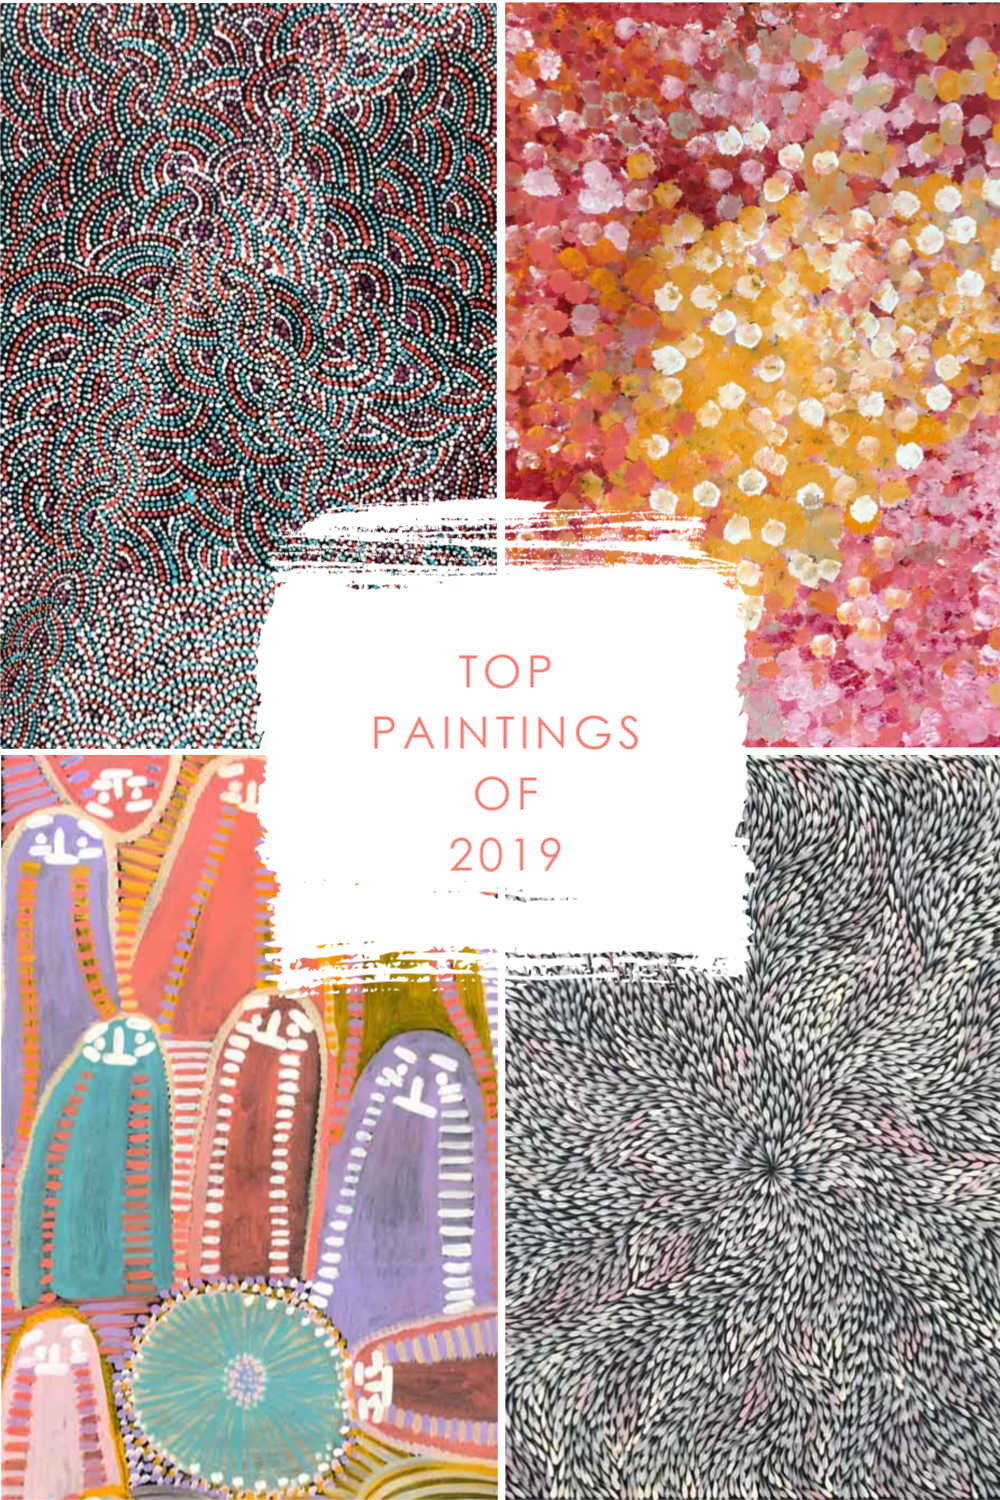 Top Aboriginal Paintings of 2019